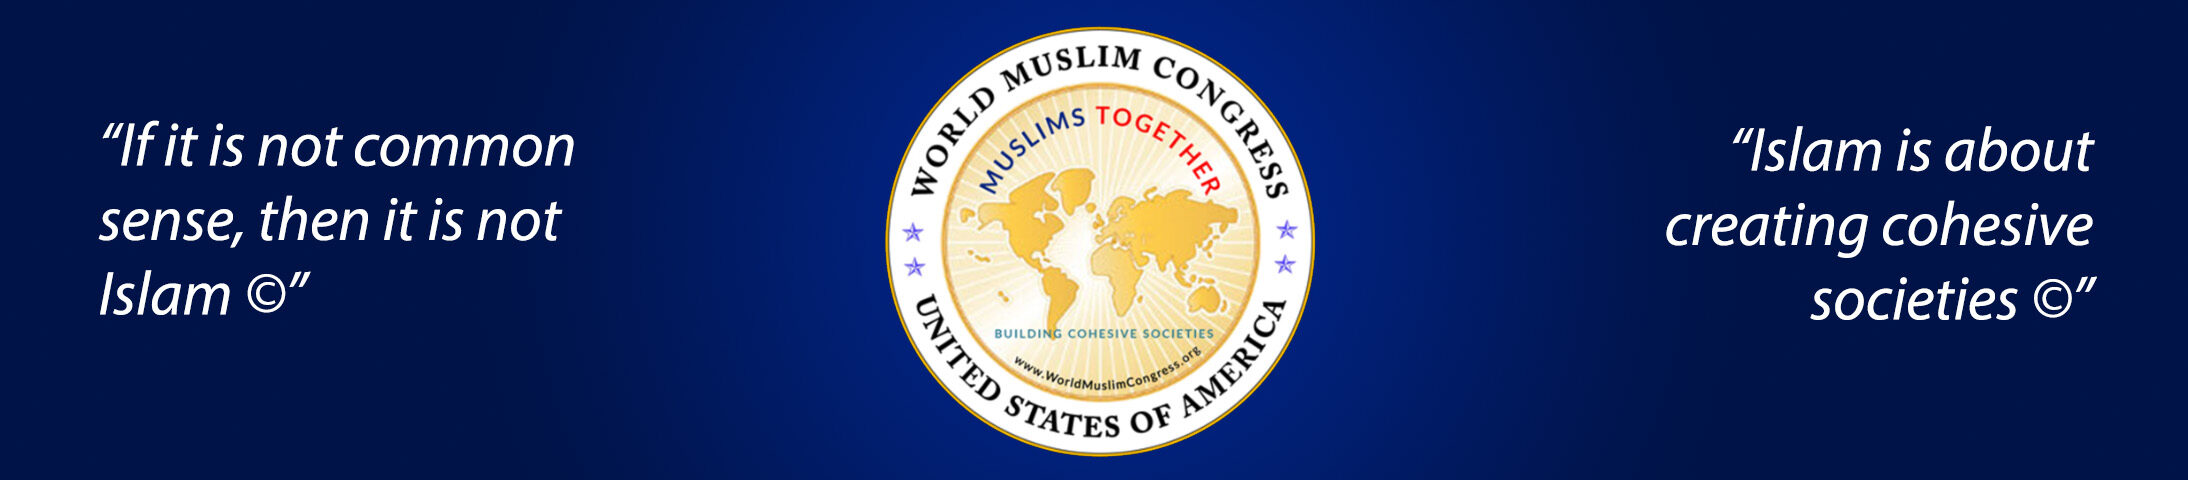 World Muslim Congress